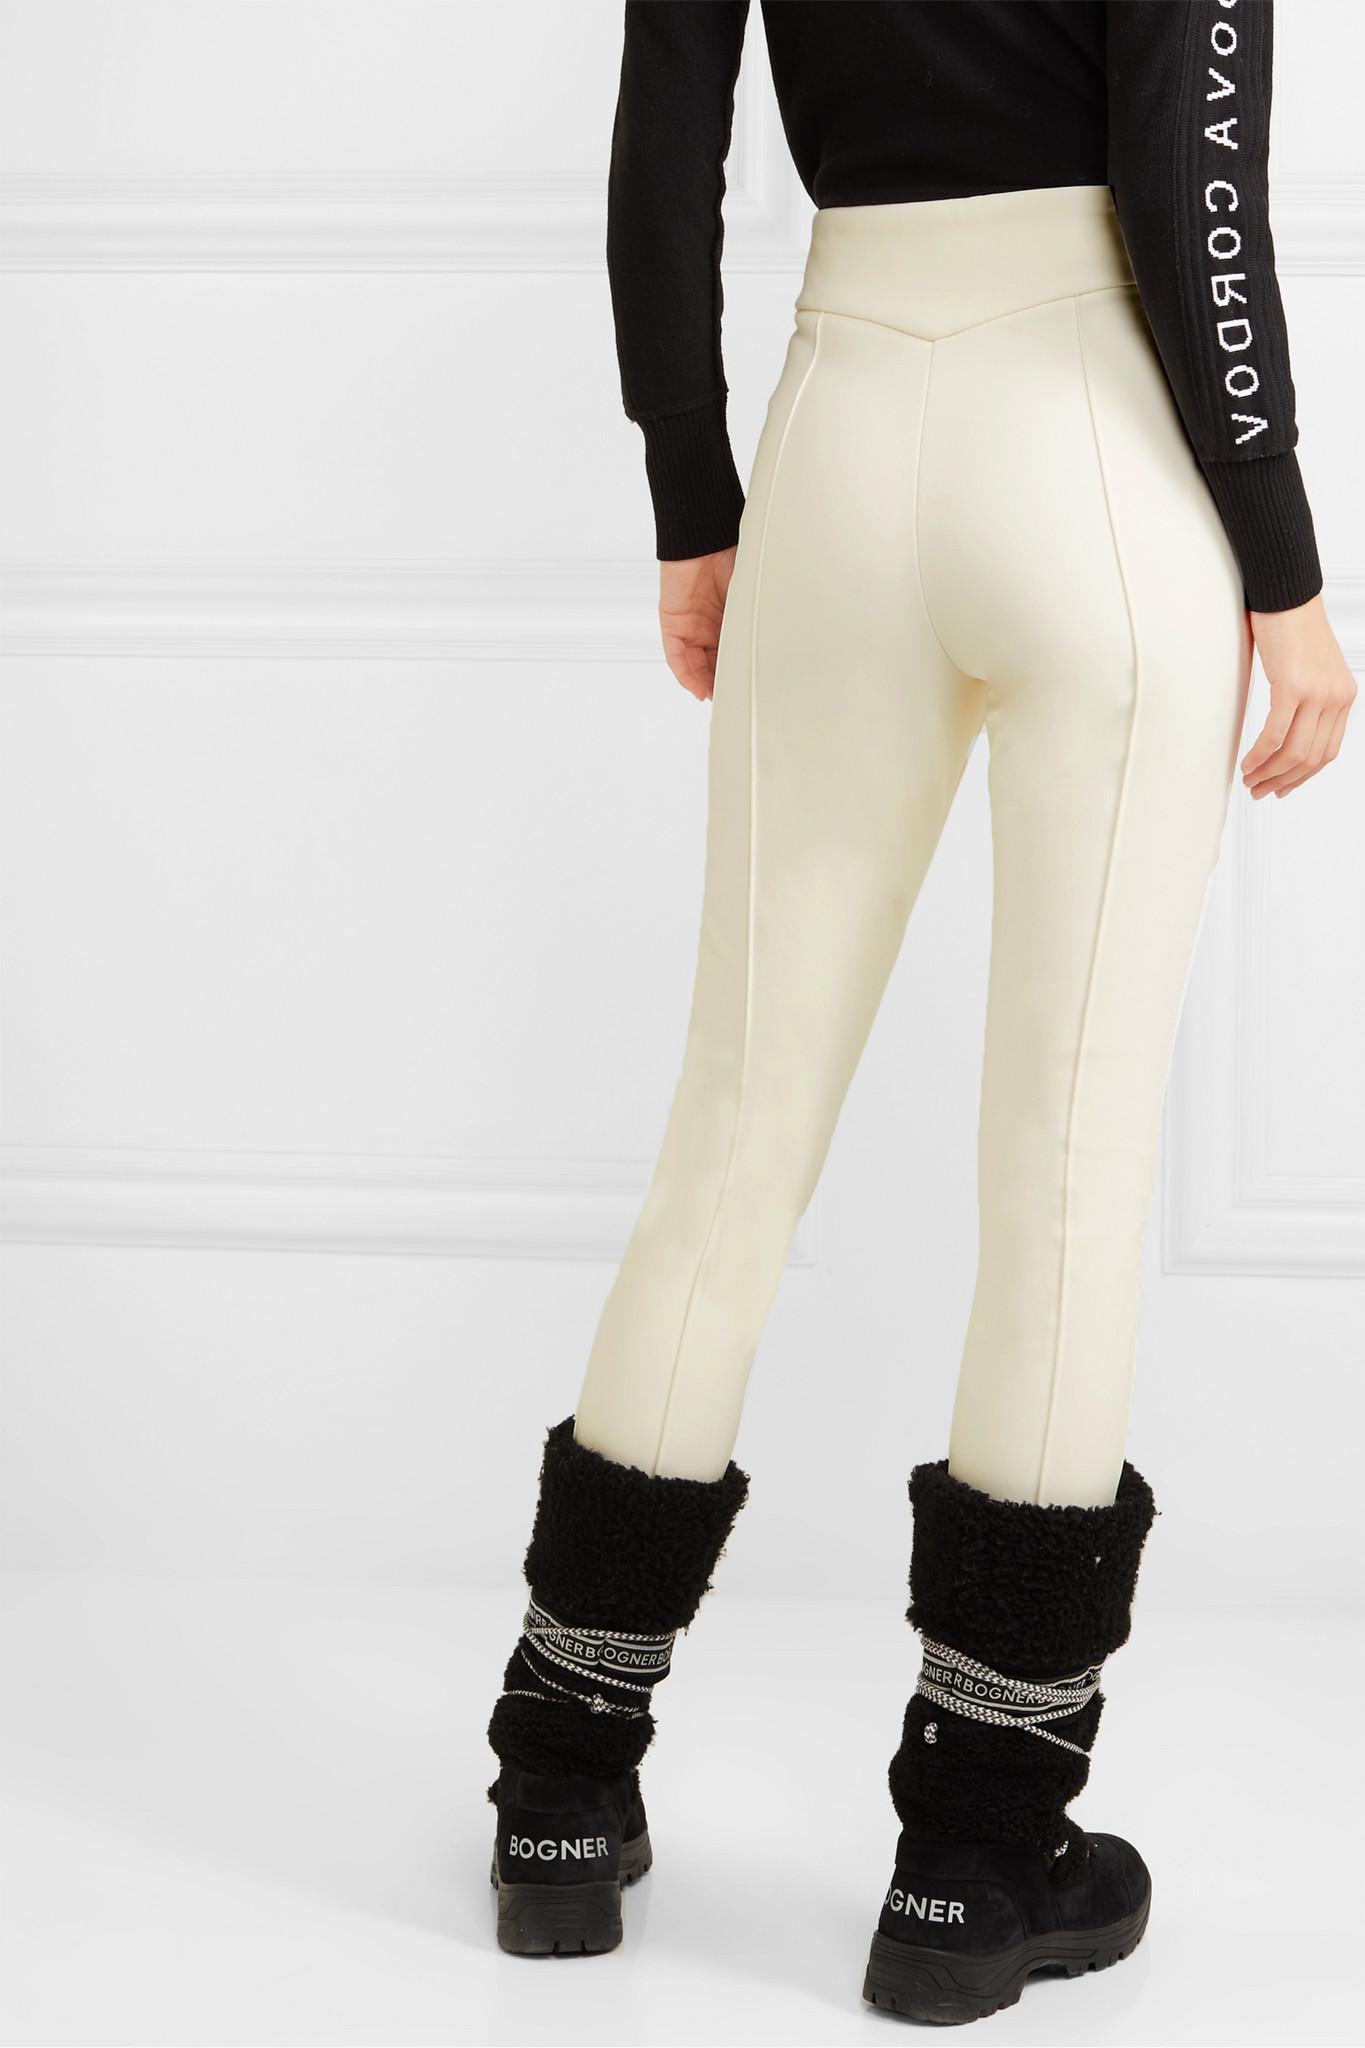 CORDOVA Fleece Val-d'isere Stretch Slim-fit Ski Pants in Ivory (White) -  Lyst